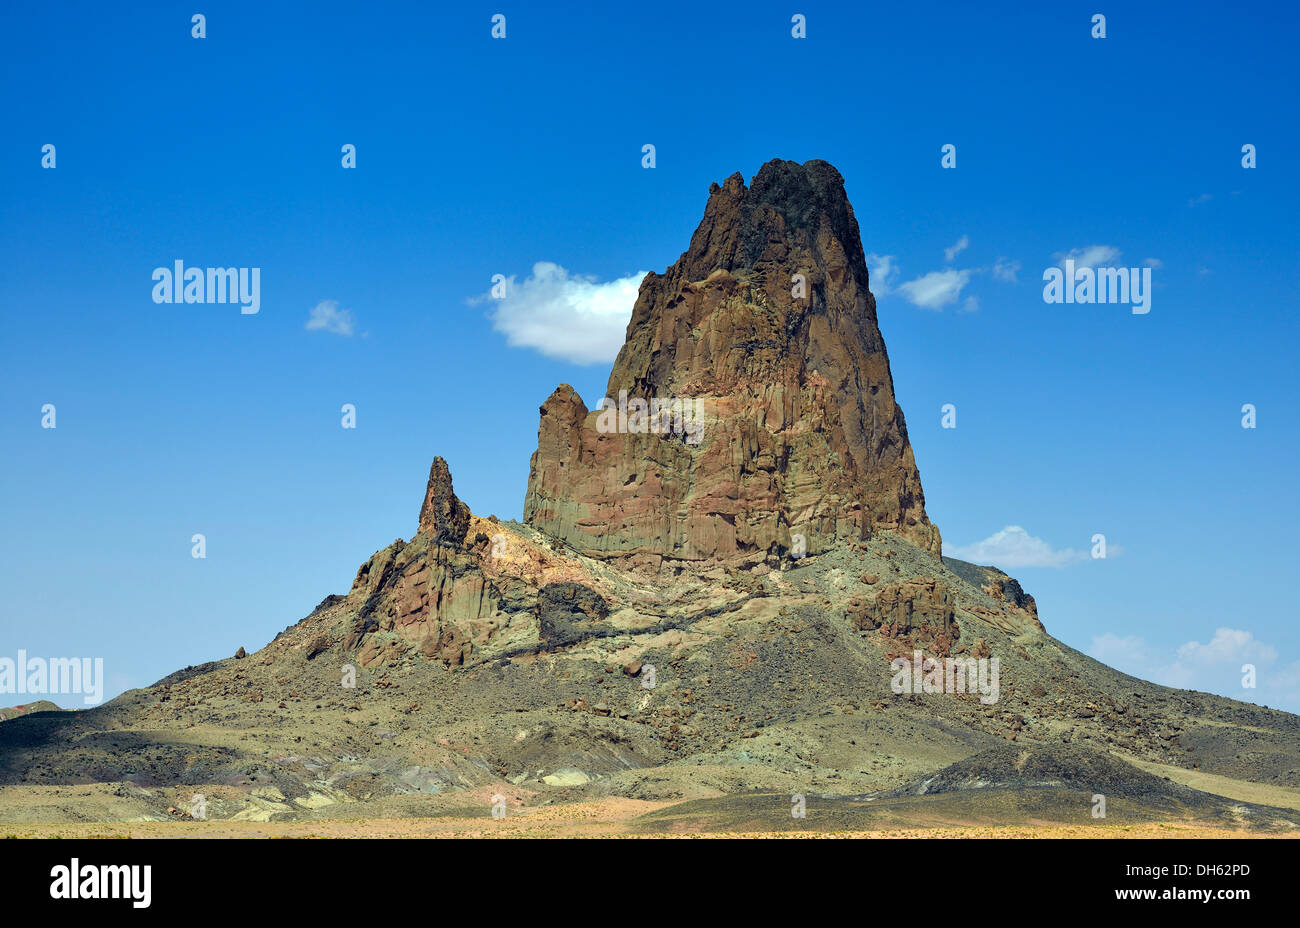 Shiprock Monolith, Heiliger Berg der Navajo-Indianer, auf dem Weg zum Monument Valley Navajo Tribal Park Stockfoto